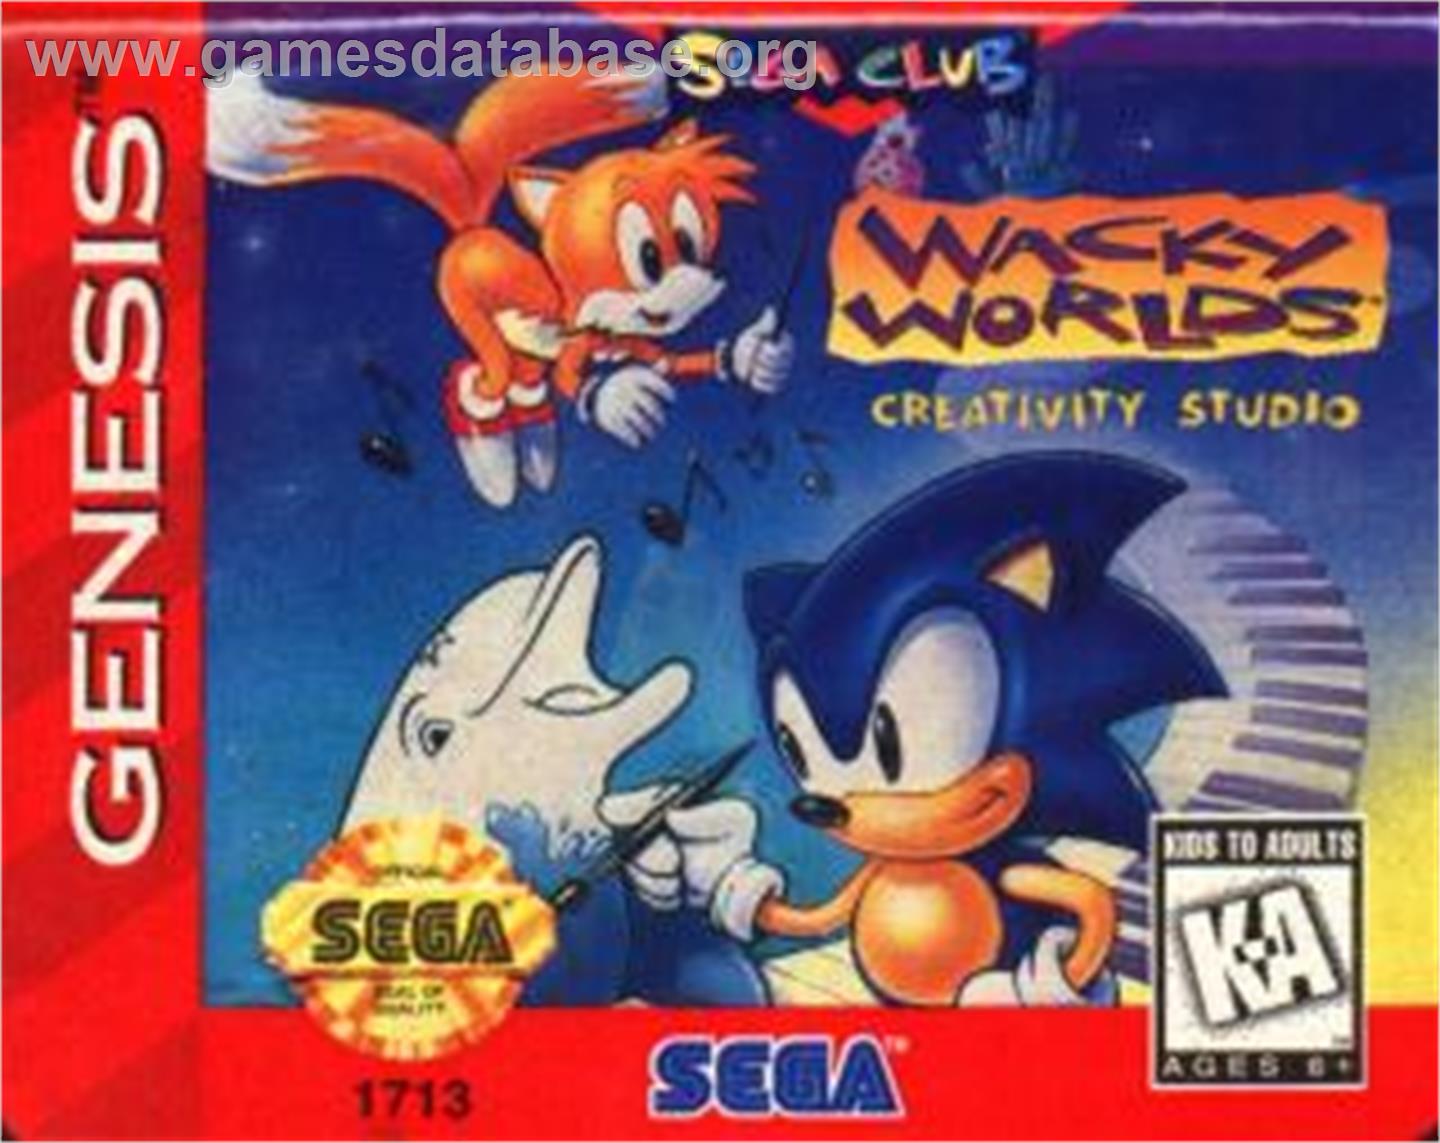 Wacky Worlds Creativity Studio - Sega Nomad - Artwork - Cartridge